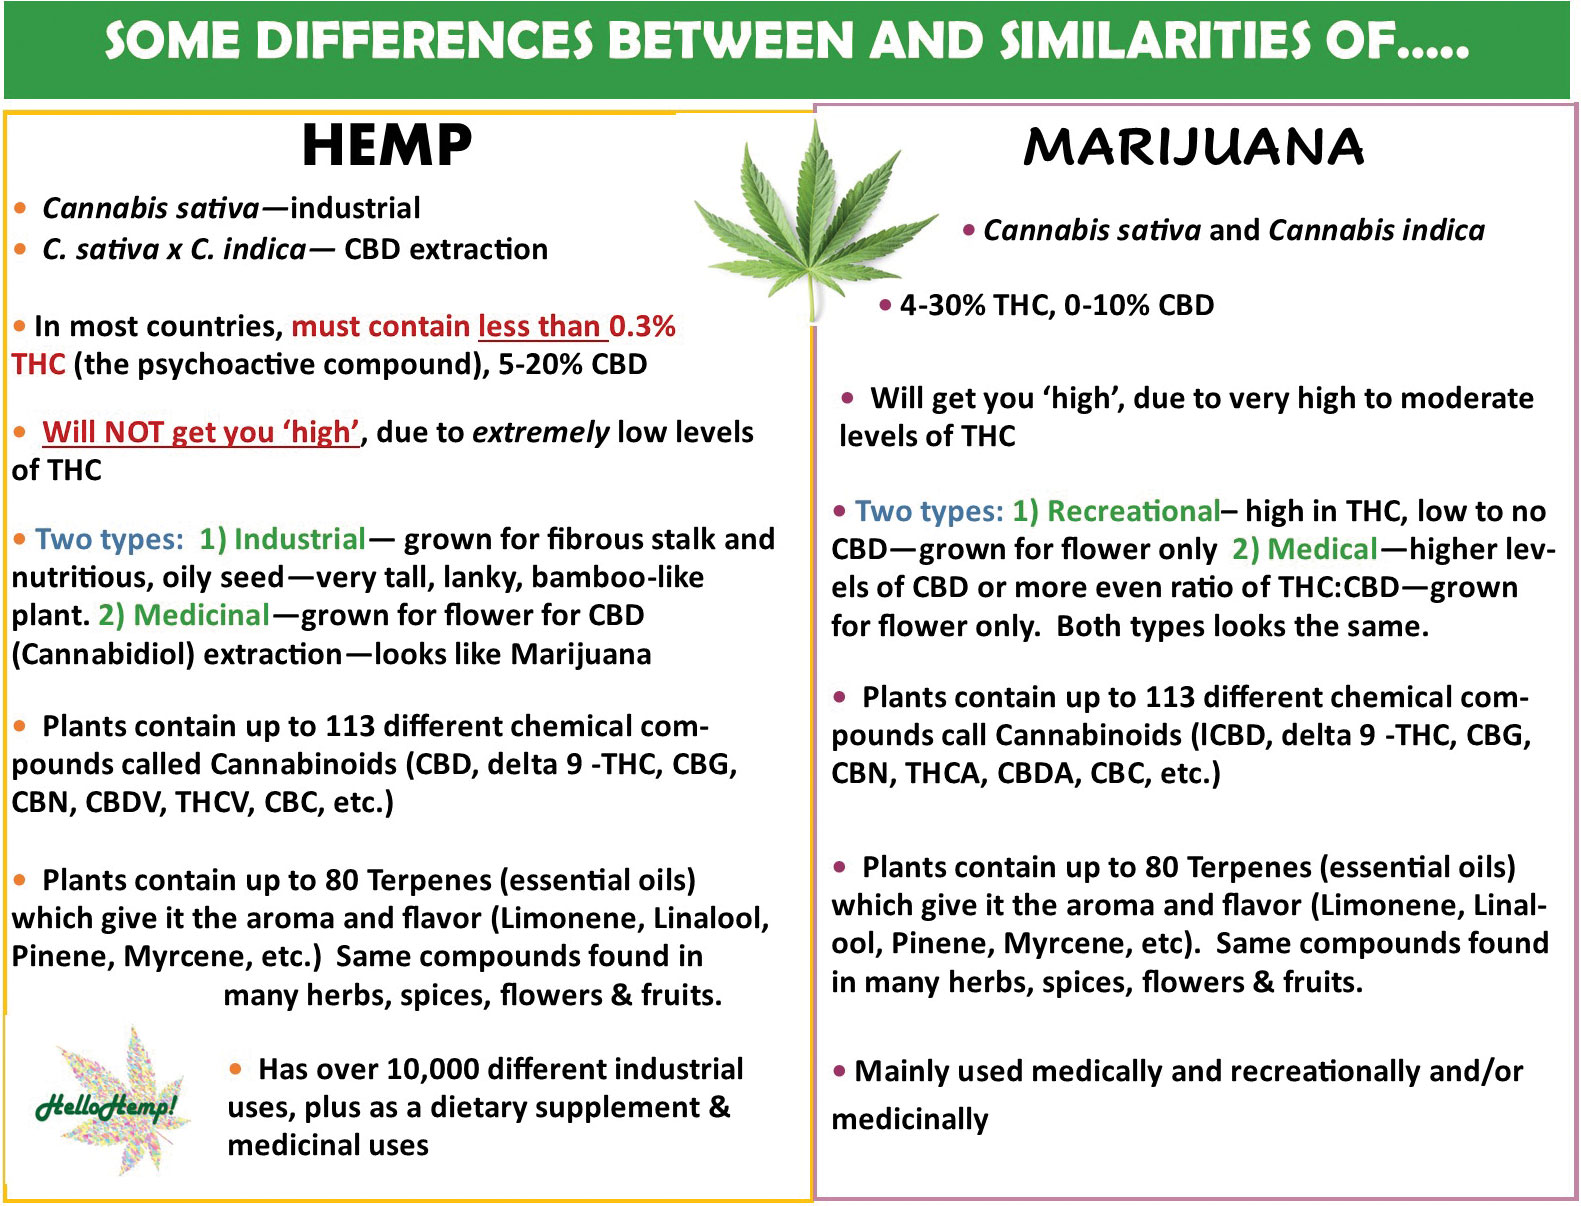 Differences between hemp and marijuana